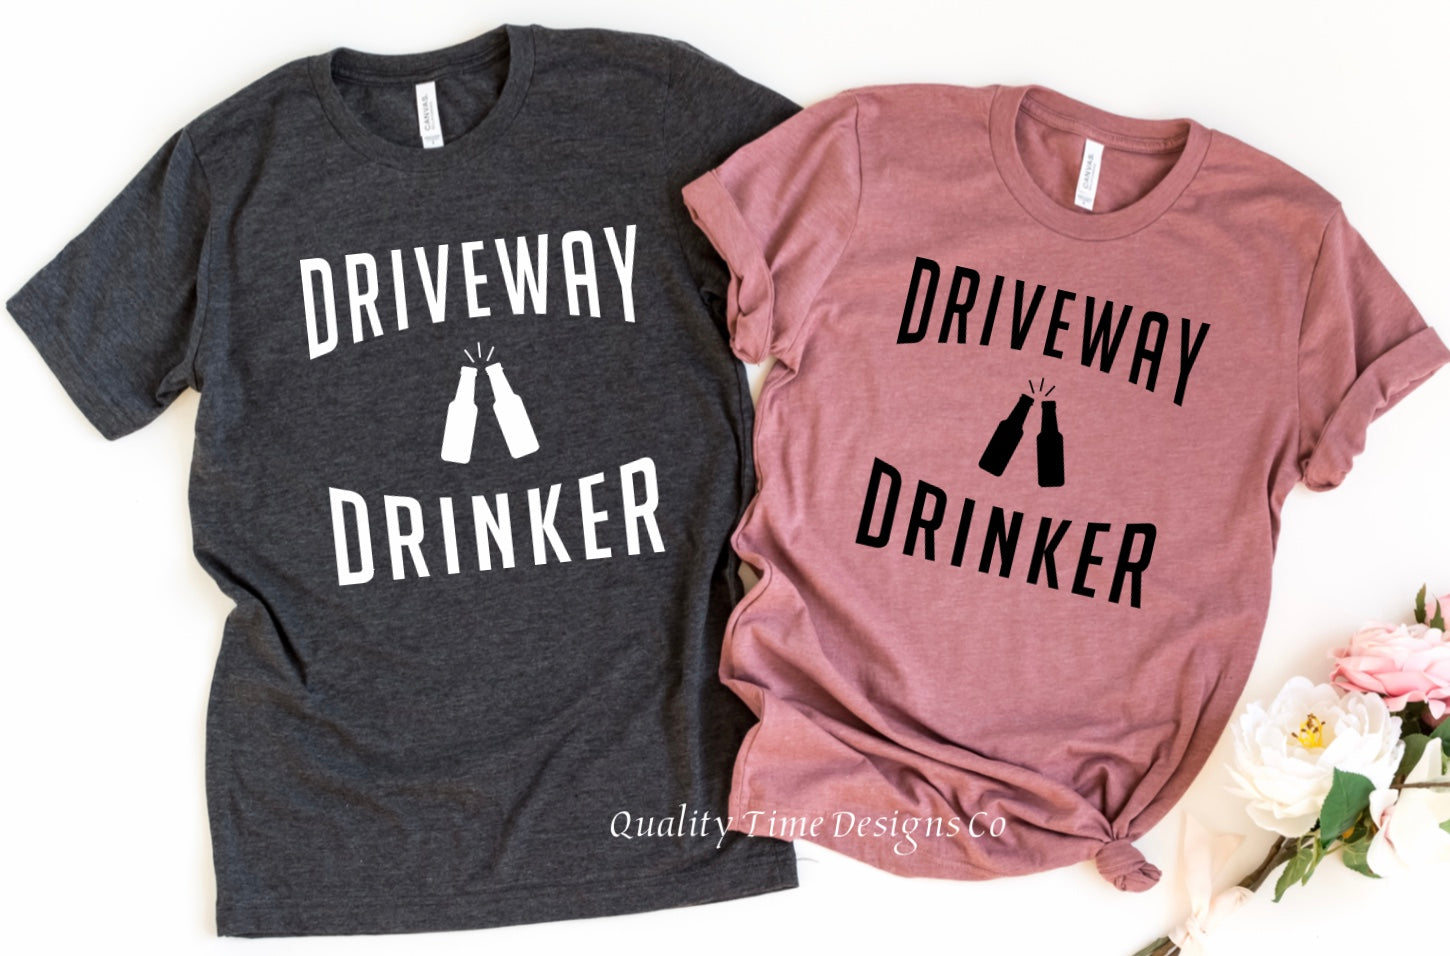 Driveway drinker t-shirt 